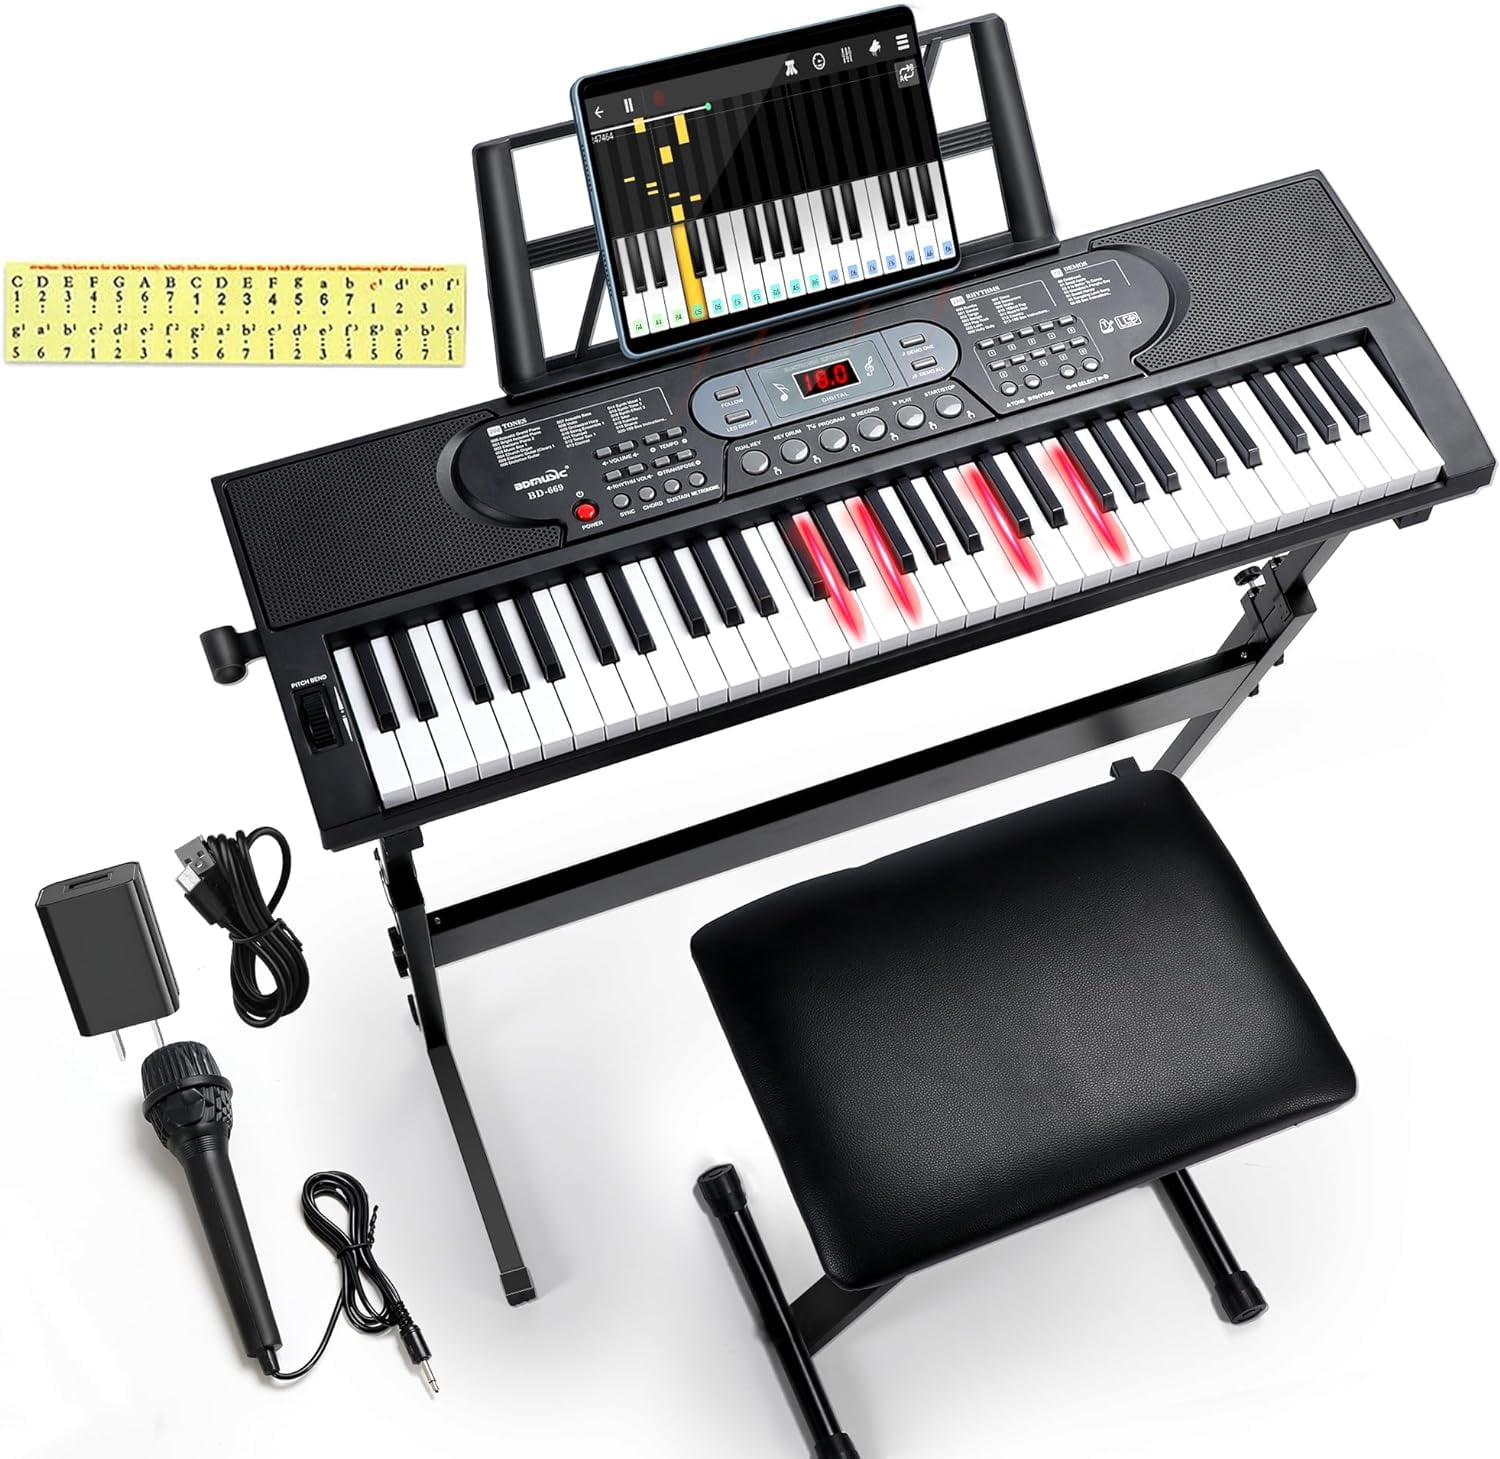 Osoeri 61 Electronic Key Keyboard Piano for Beginner,Portable Digital ...